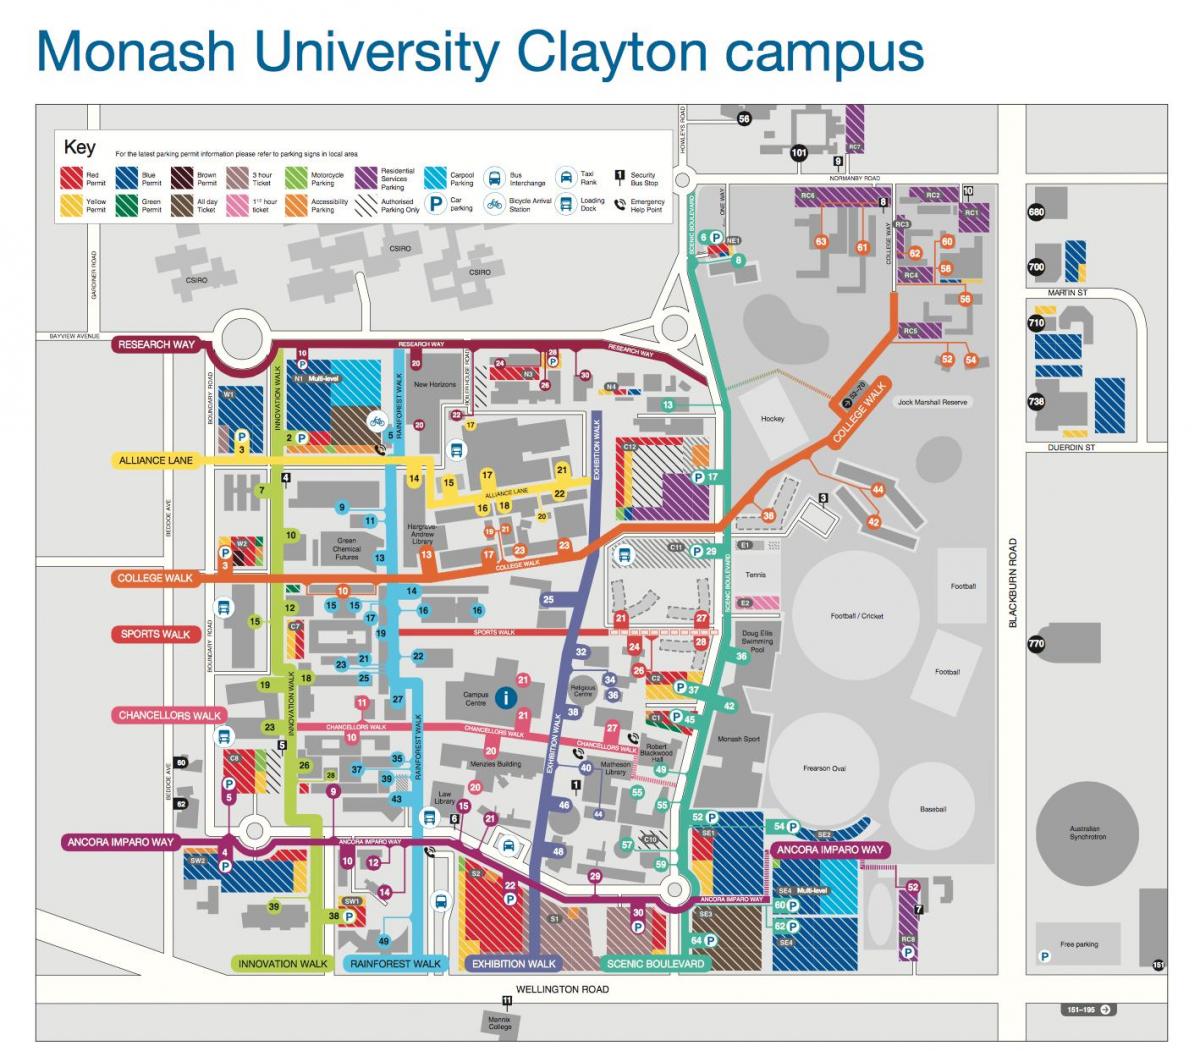 A Monash university Clayton mapa